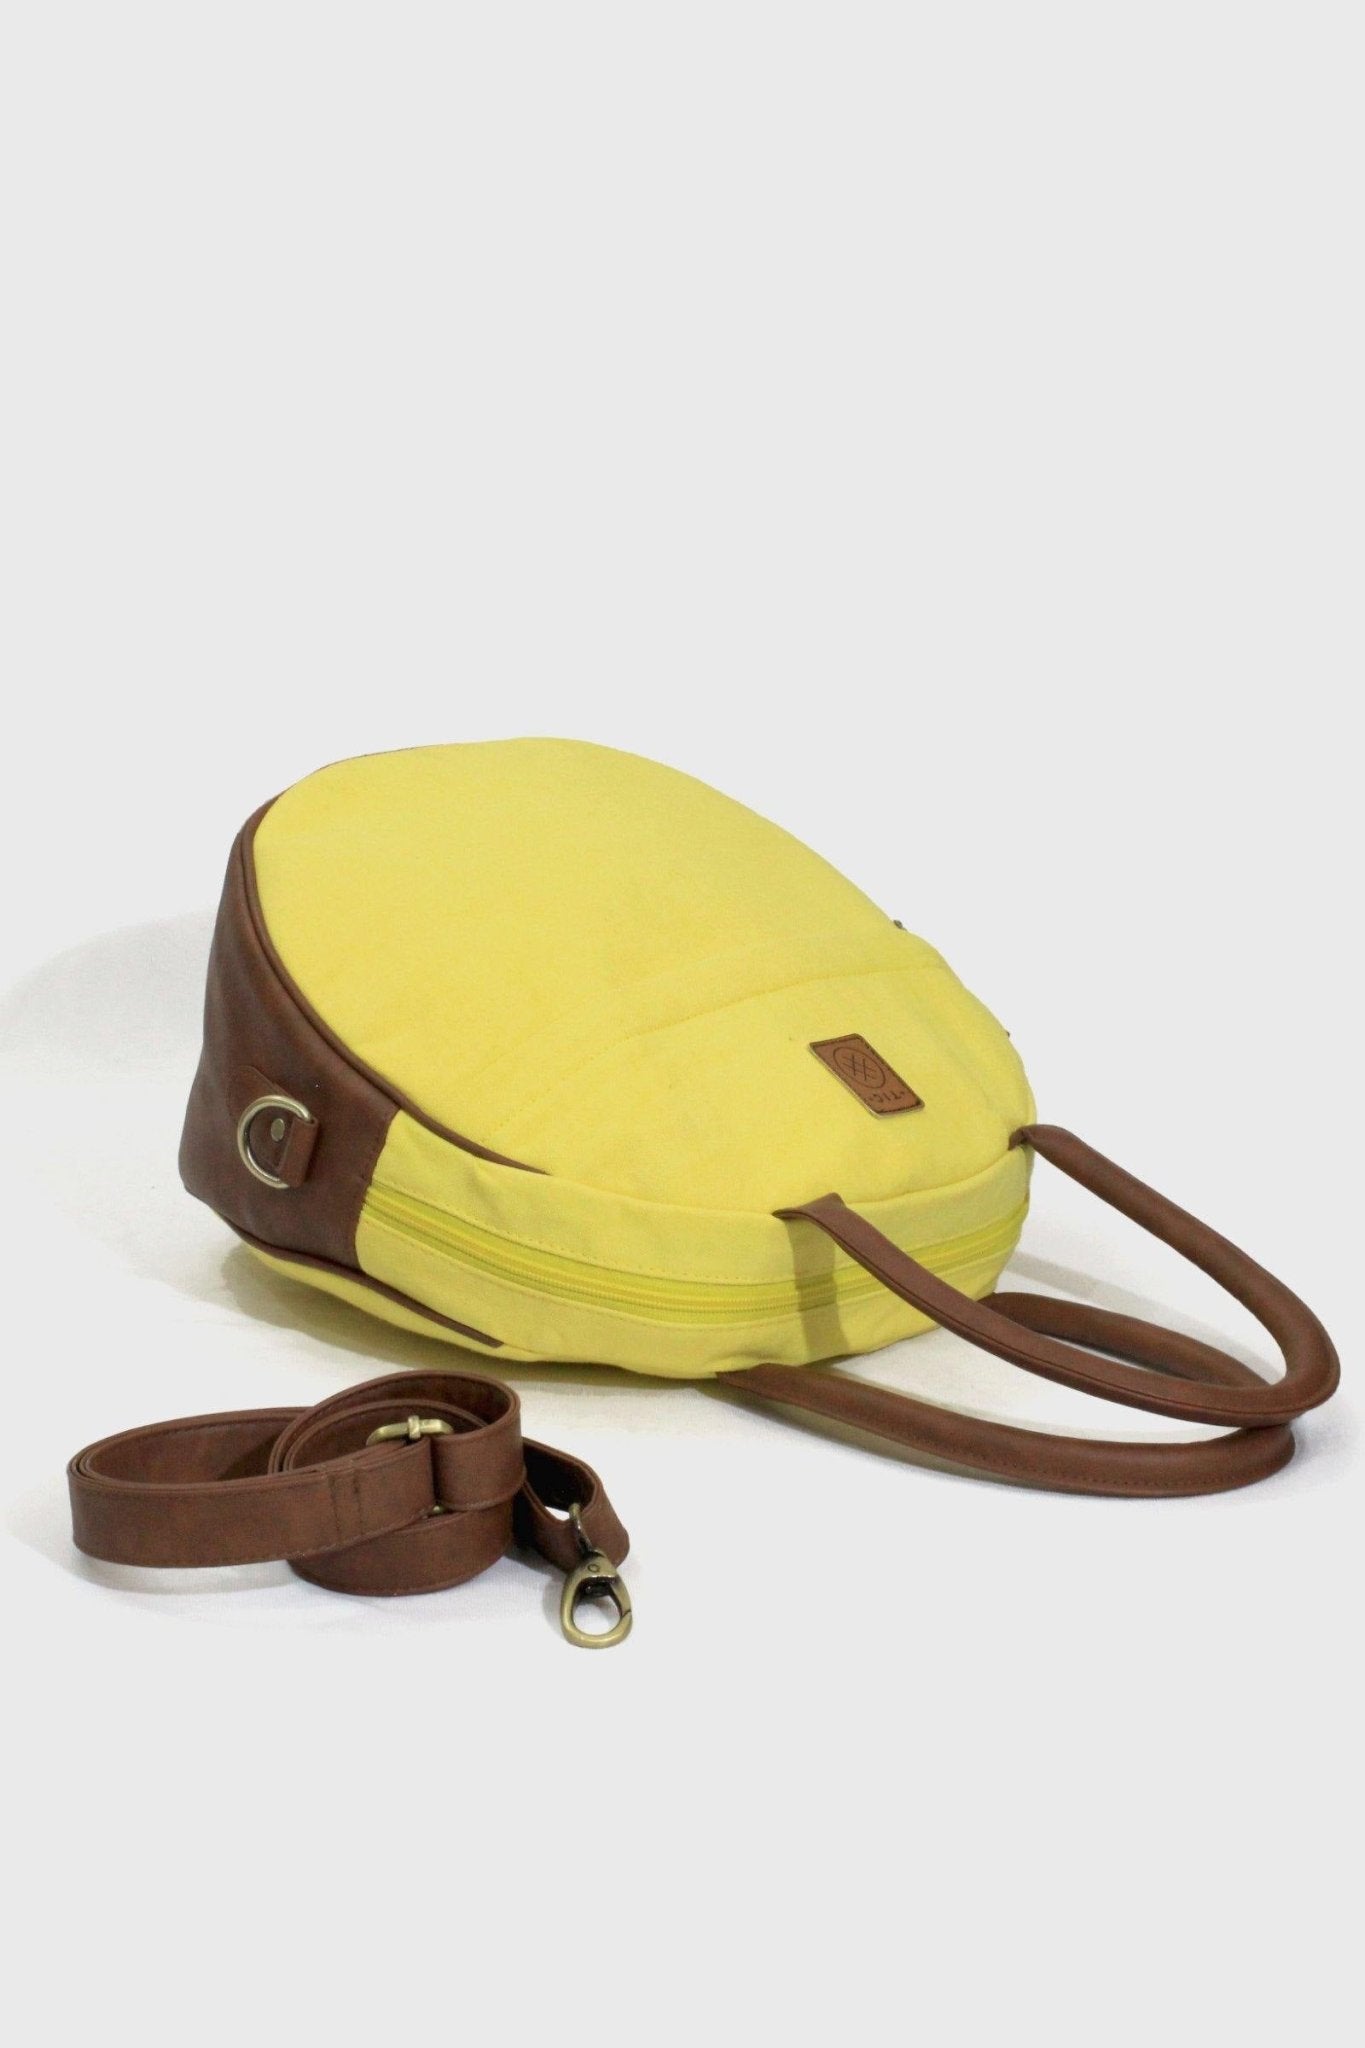 Kataan Round Yellow Handbag - The Indian Cause